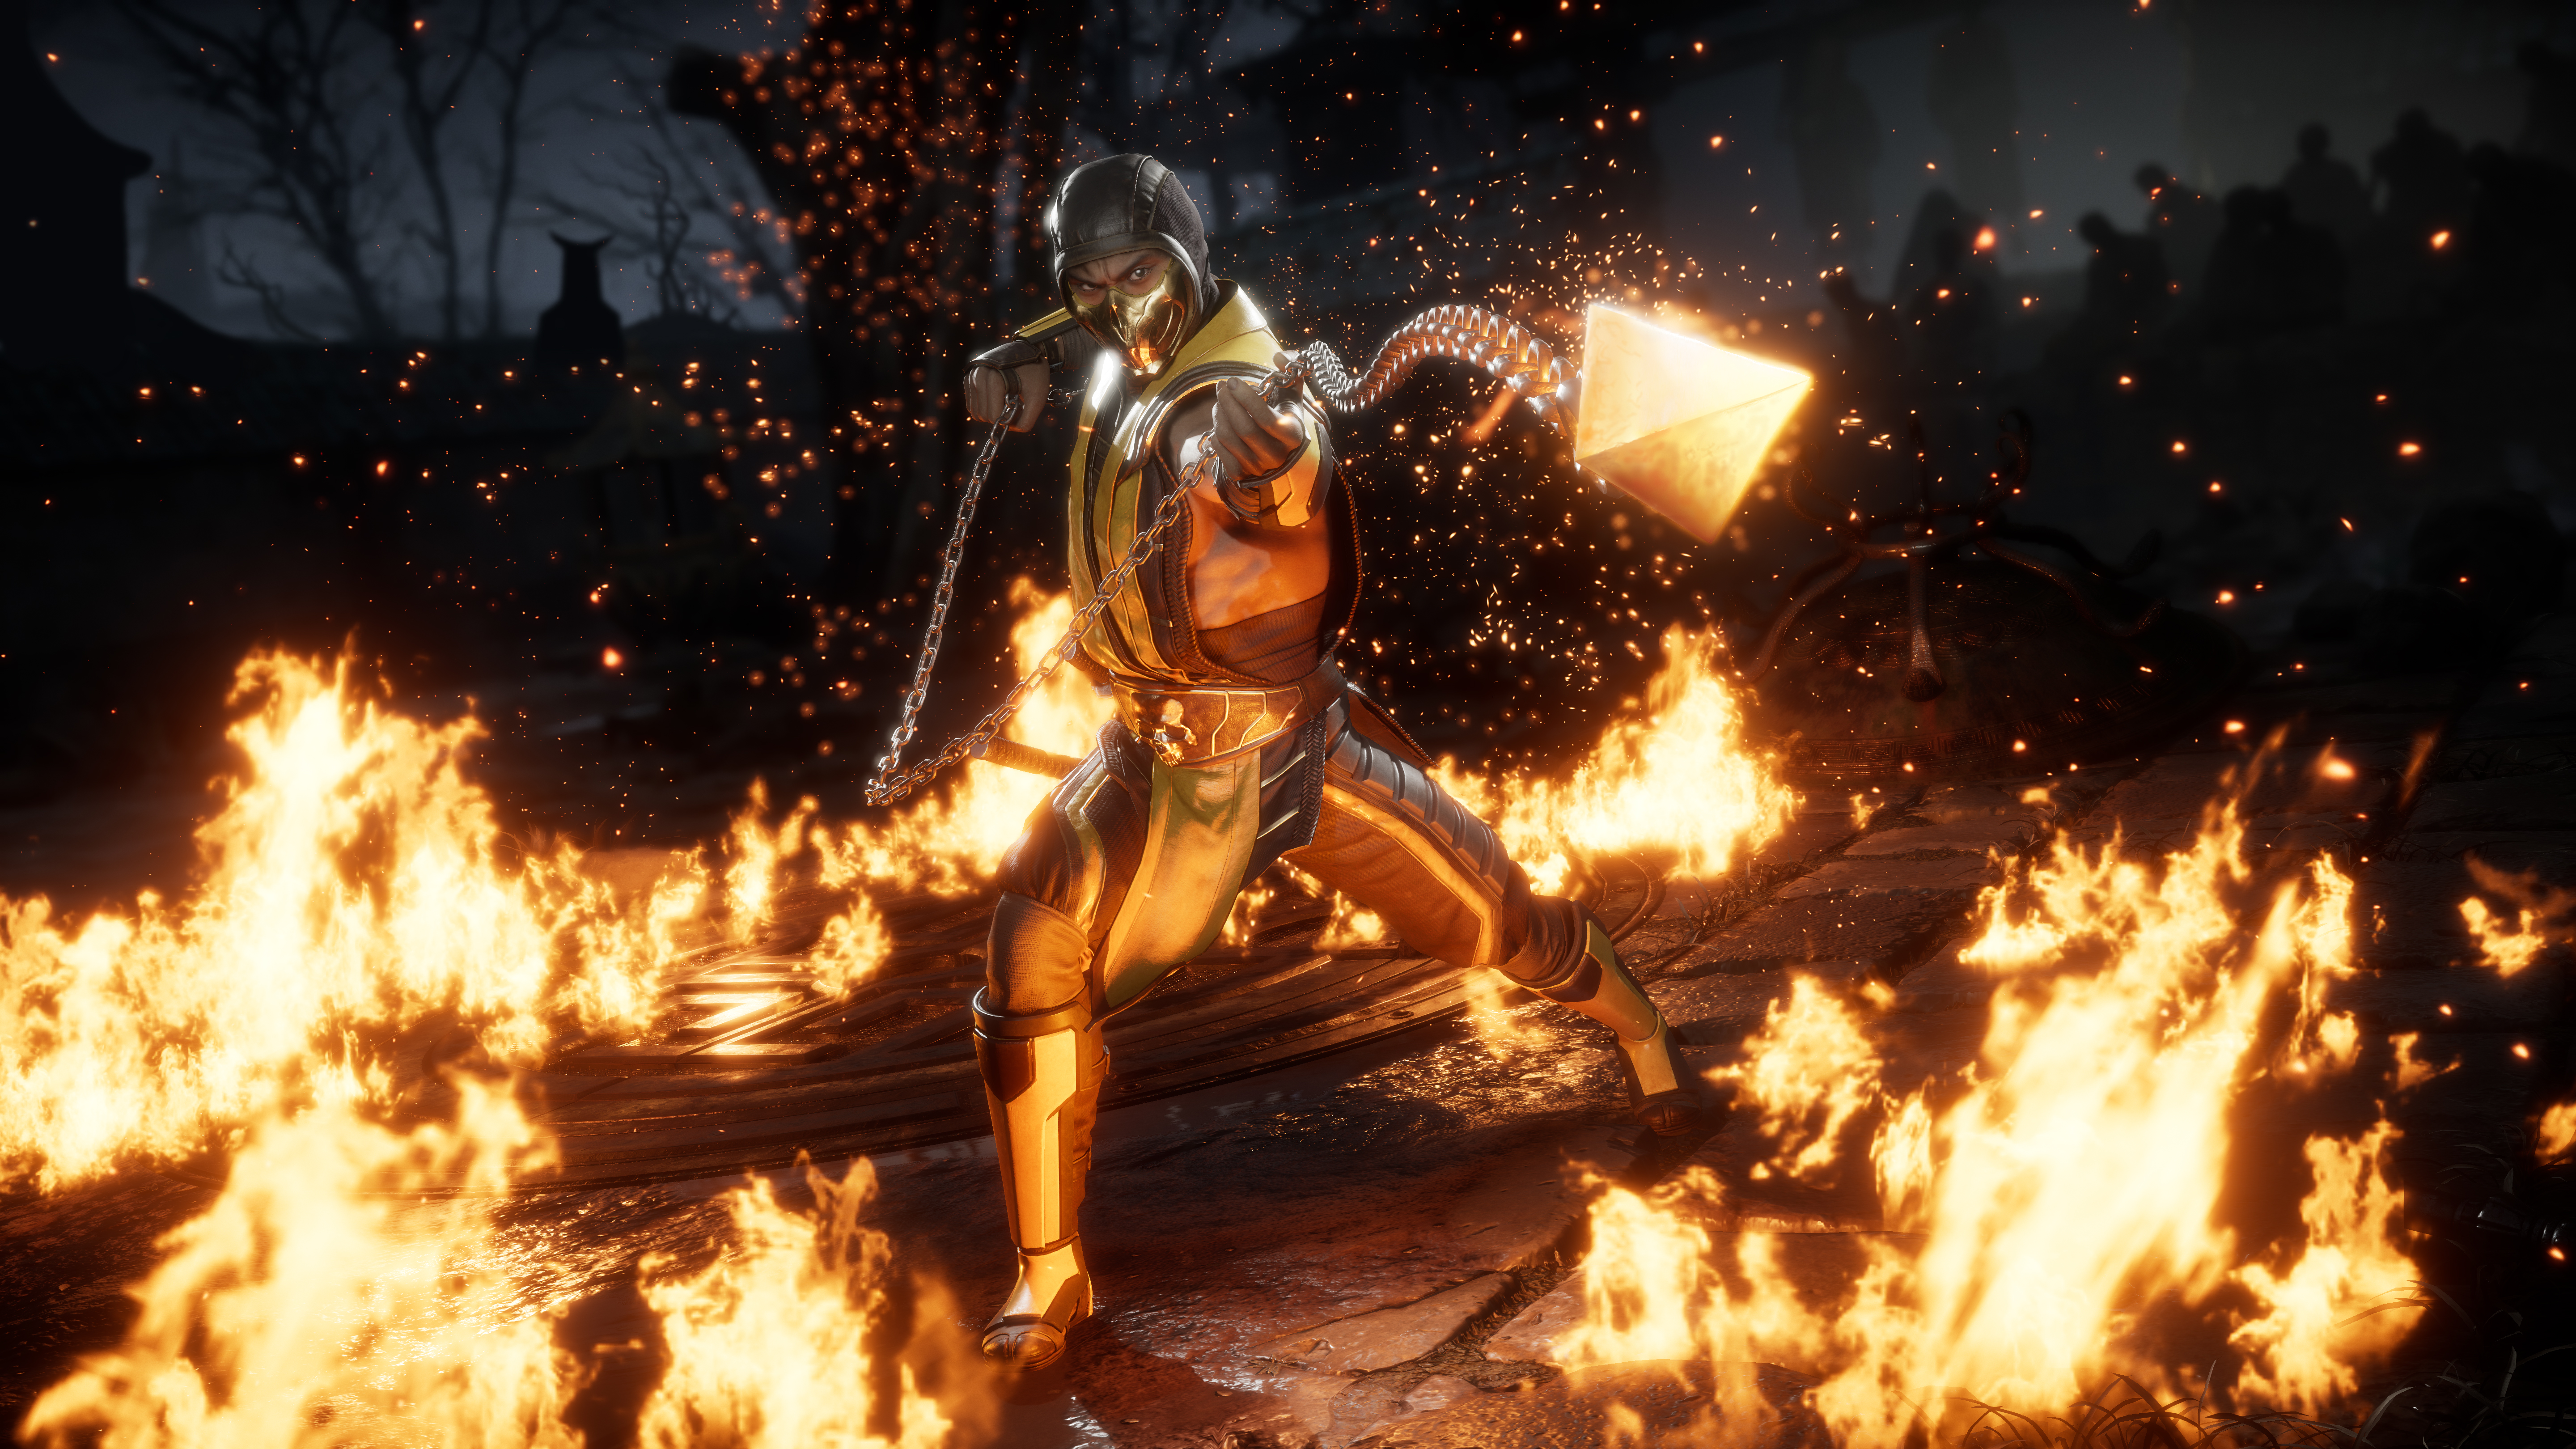 Report: Mortal Kombat 12 To Reboot Entire Series, Titled 'Mortal